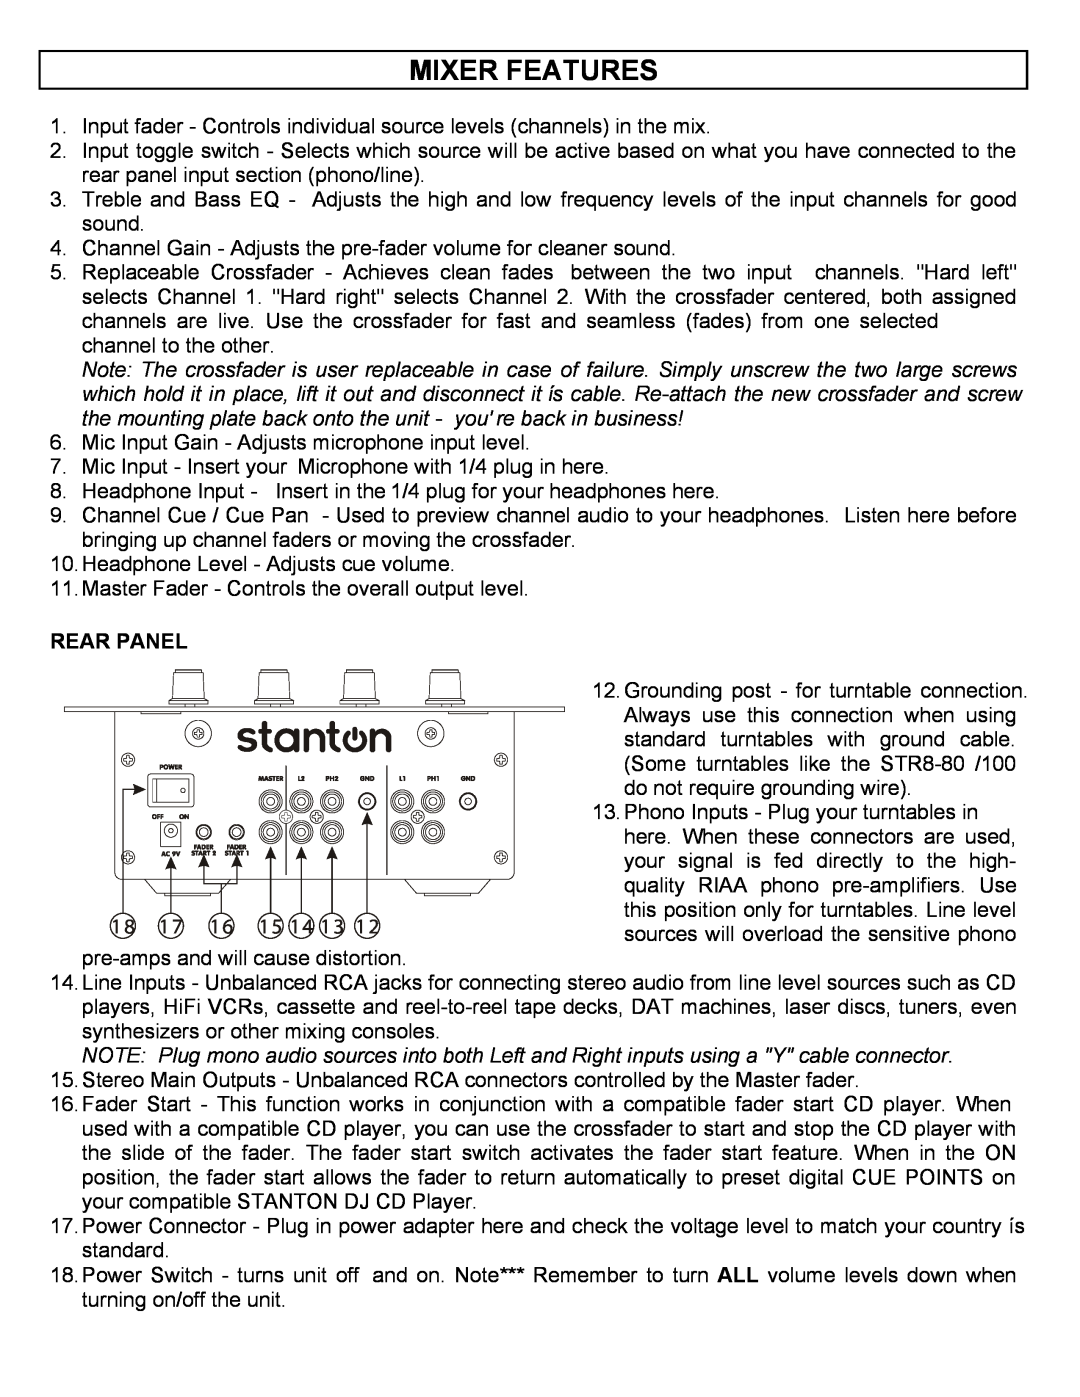 Stanton SMX.211 manual Rear Panel, 18 17 16 15 14 13, Mixer Features 